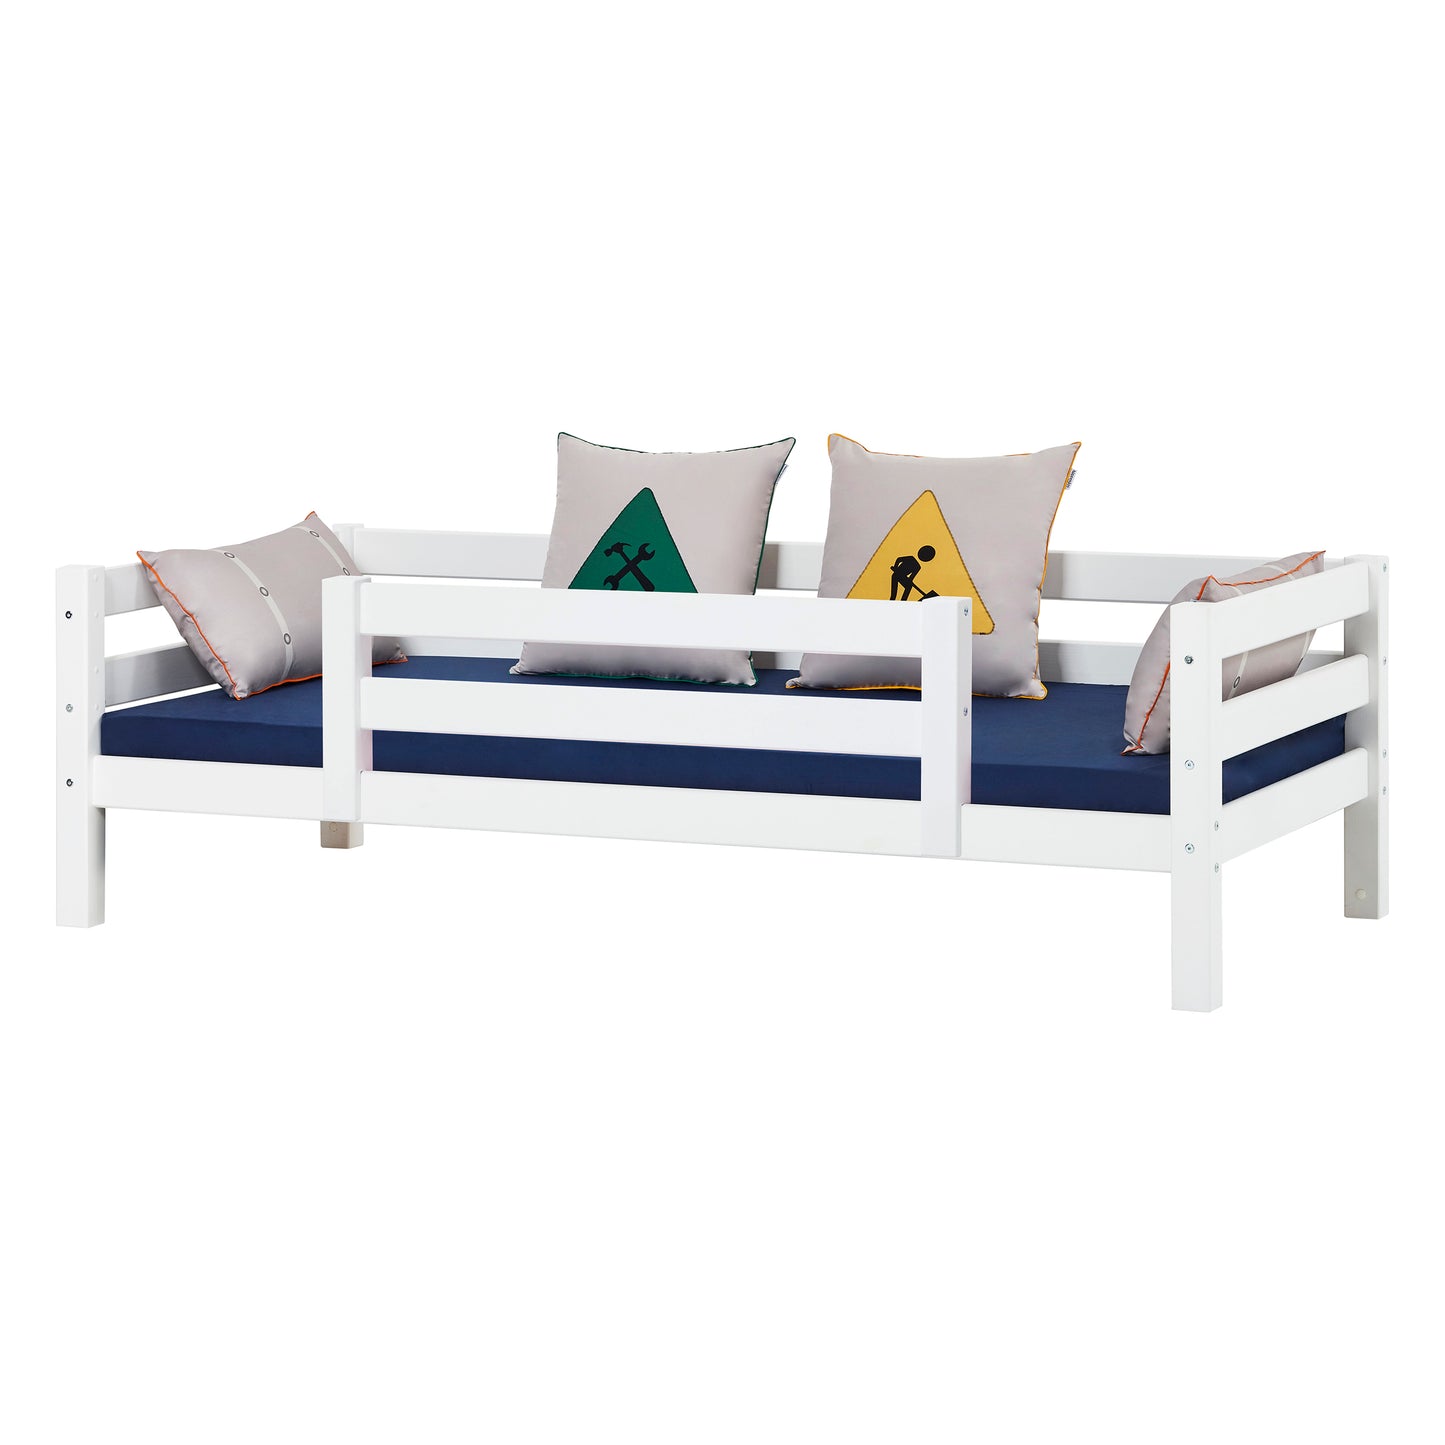 Hoppekids ECO Luxury junior bed with 1/2 bed rail, Flexible slat frame